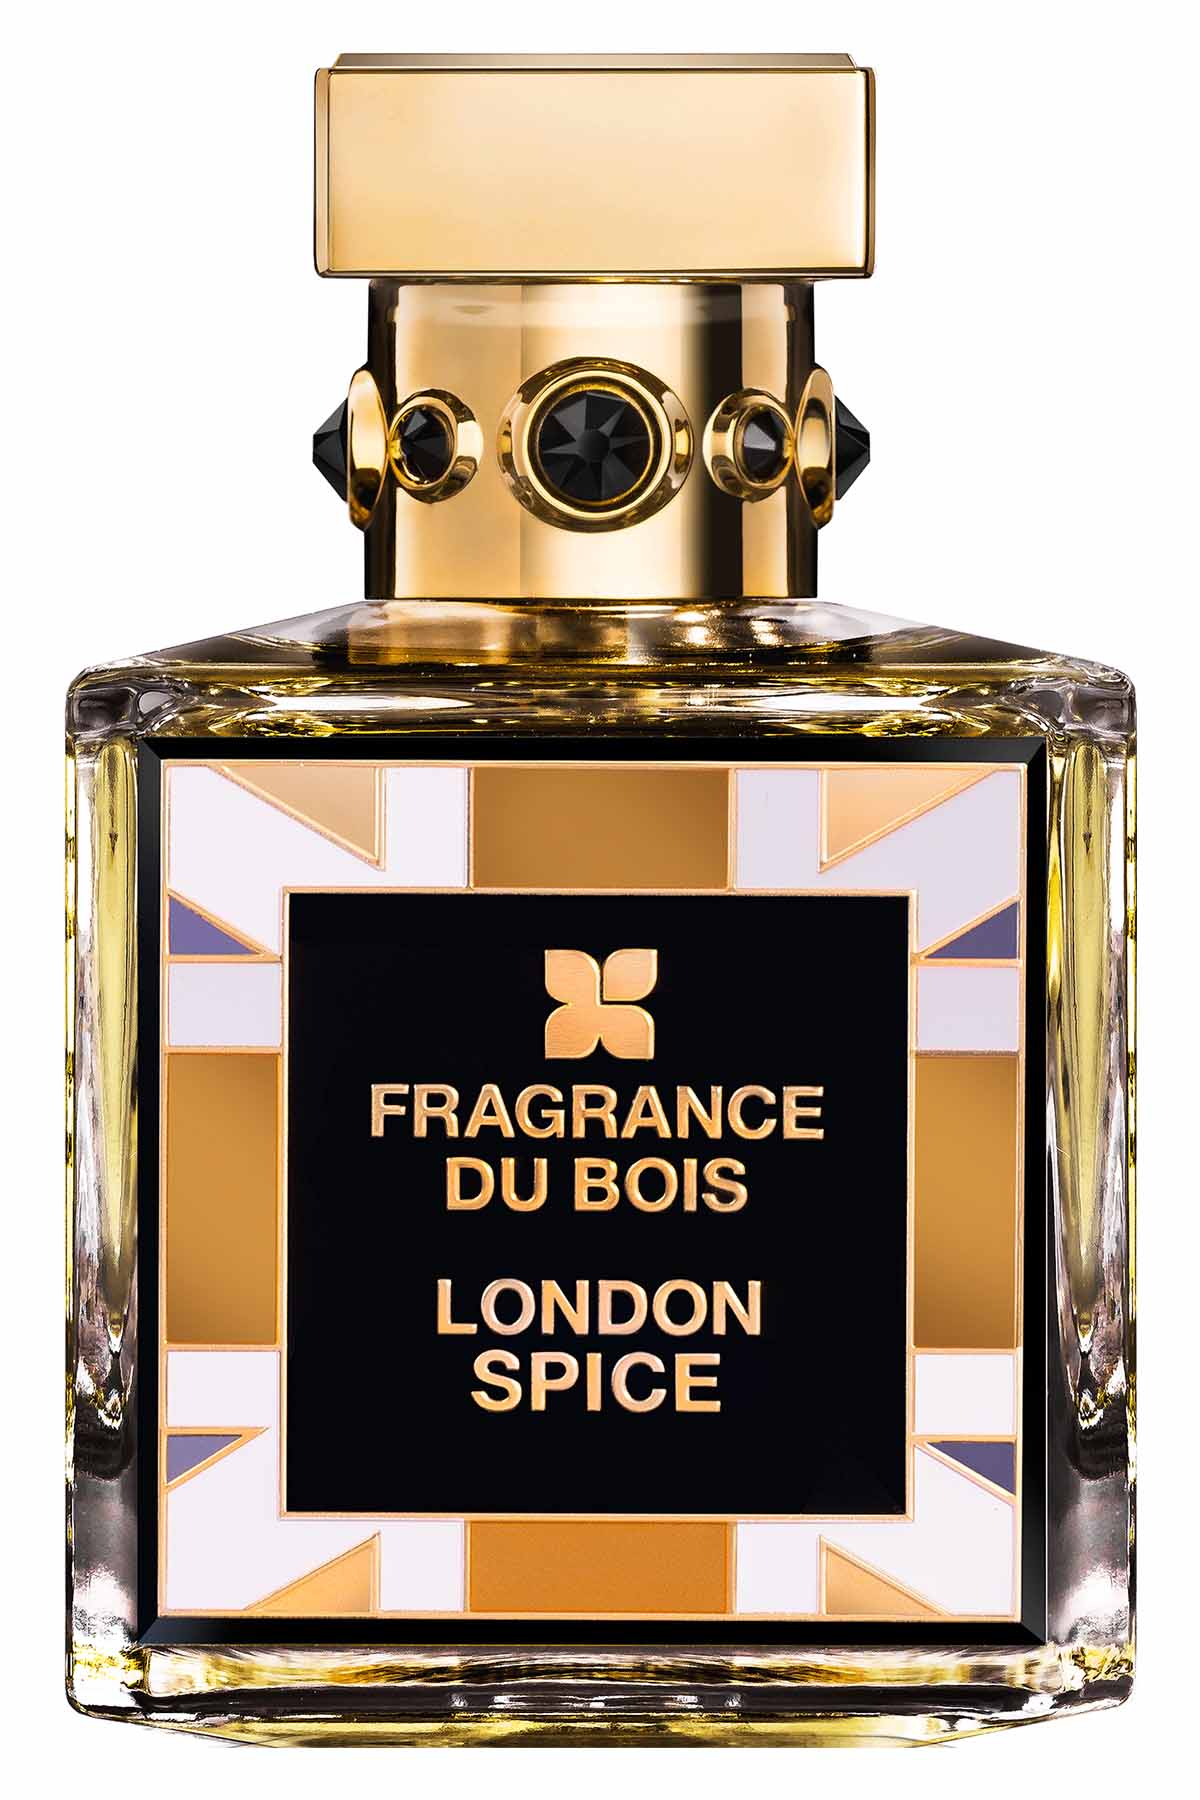 London Spice Parfum by Fragrance Du Bois